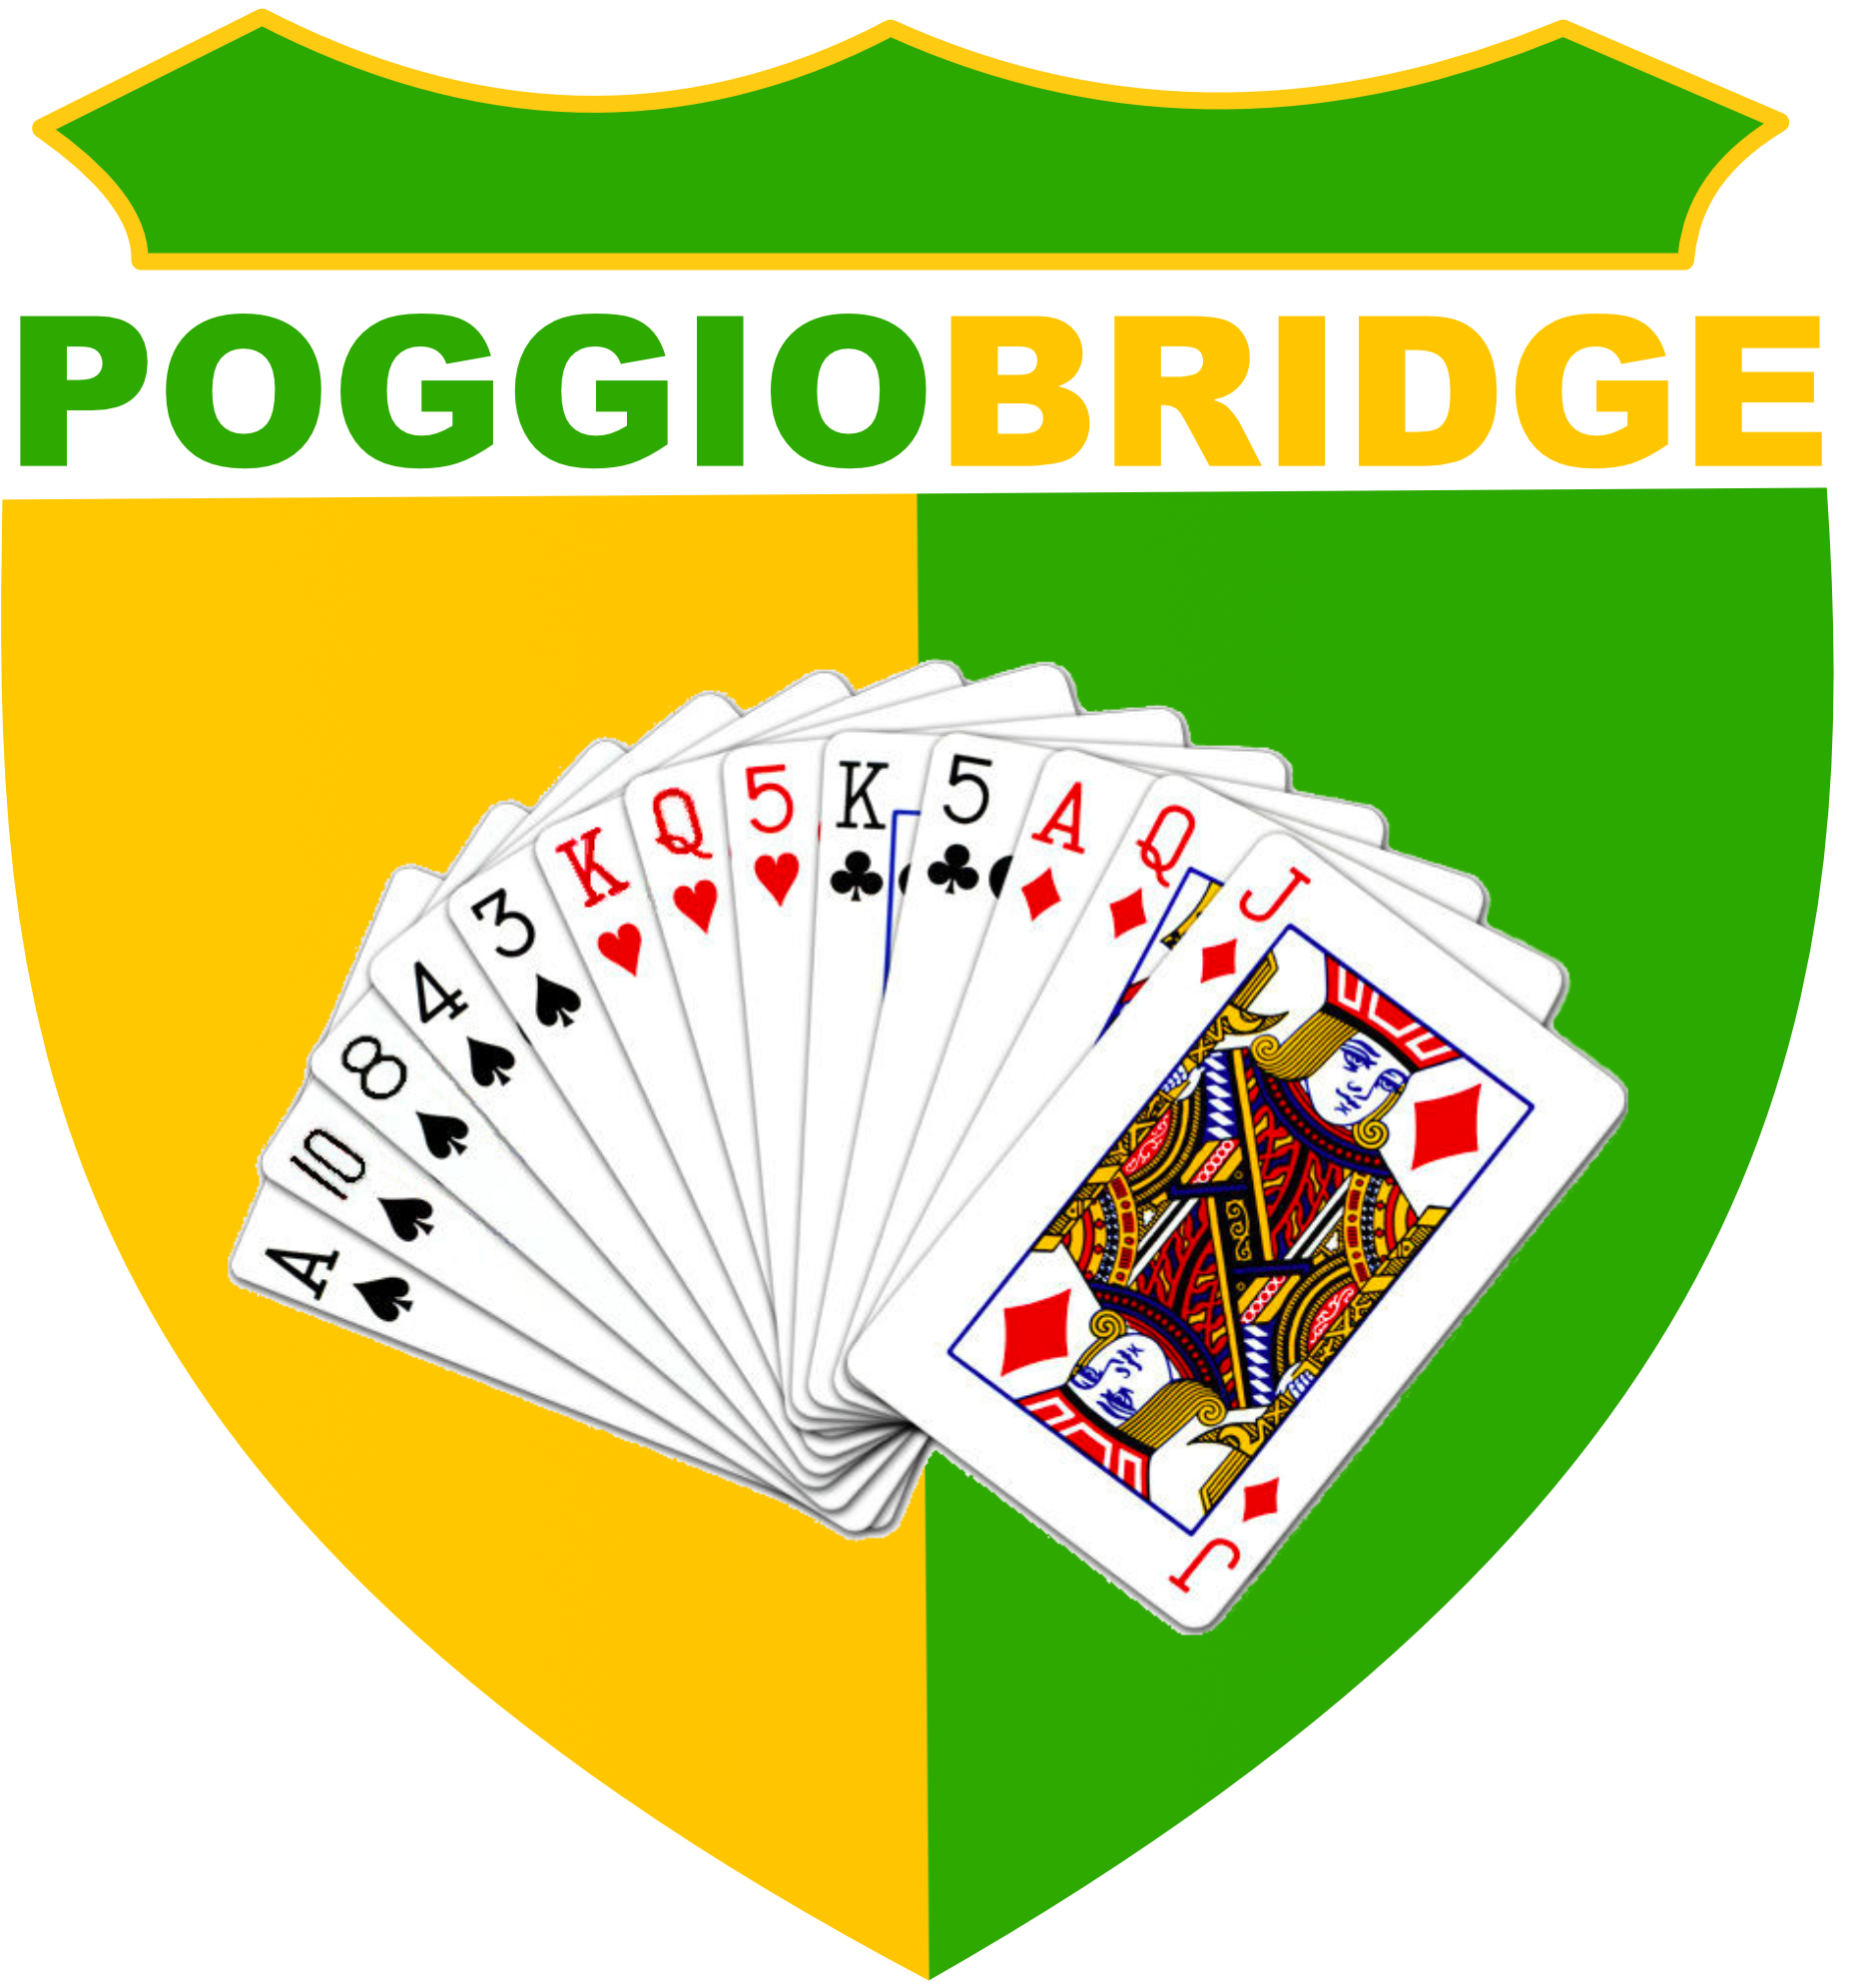 Poggio Bridge